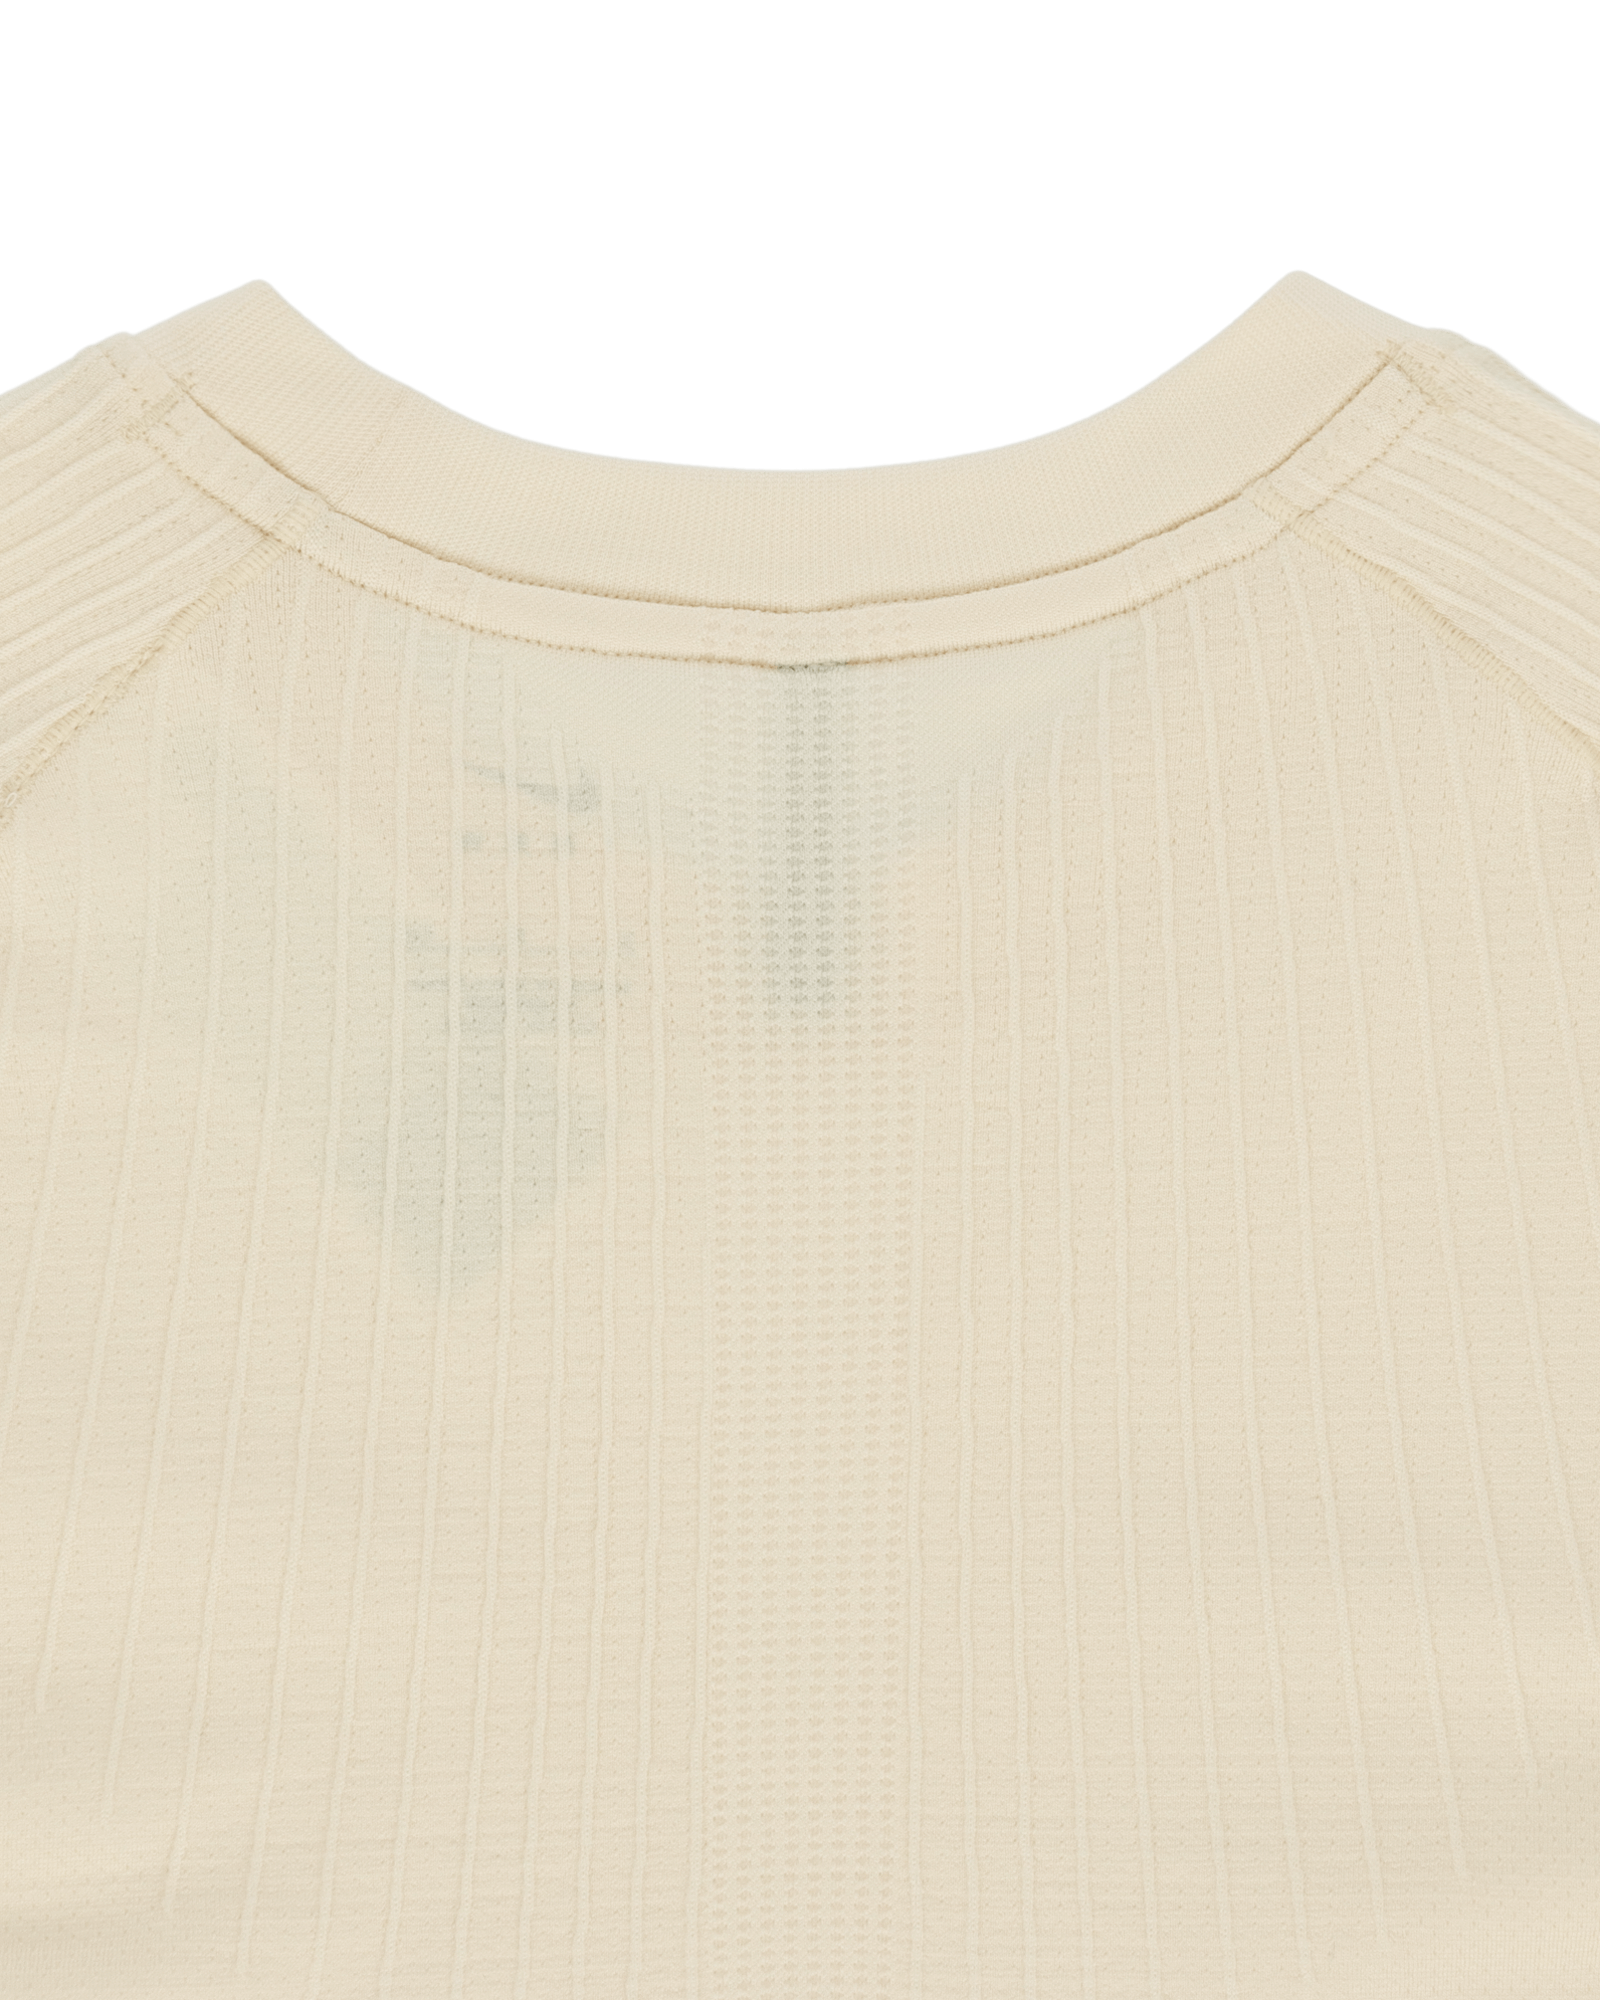 Nike Special Project Wmns Nrg Mmw Df Ls Top Flat Opal T-Shirts Longsleeve DD9424-280